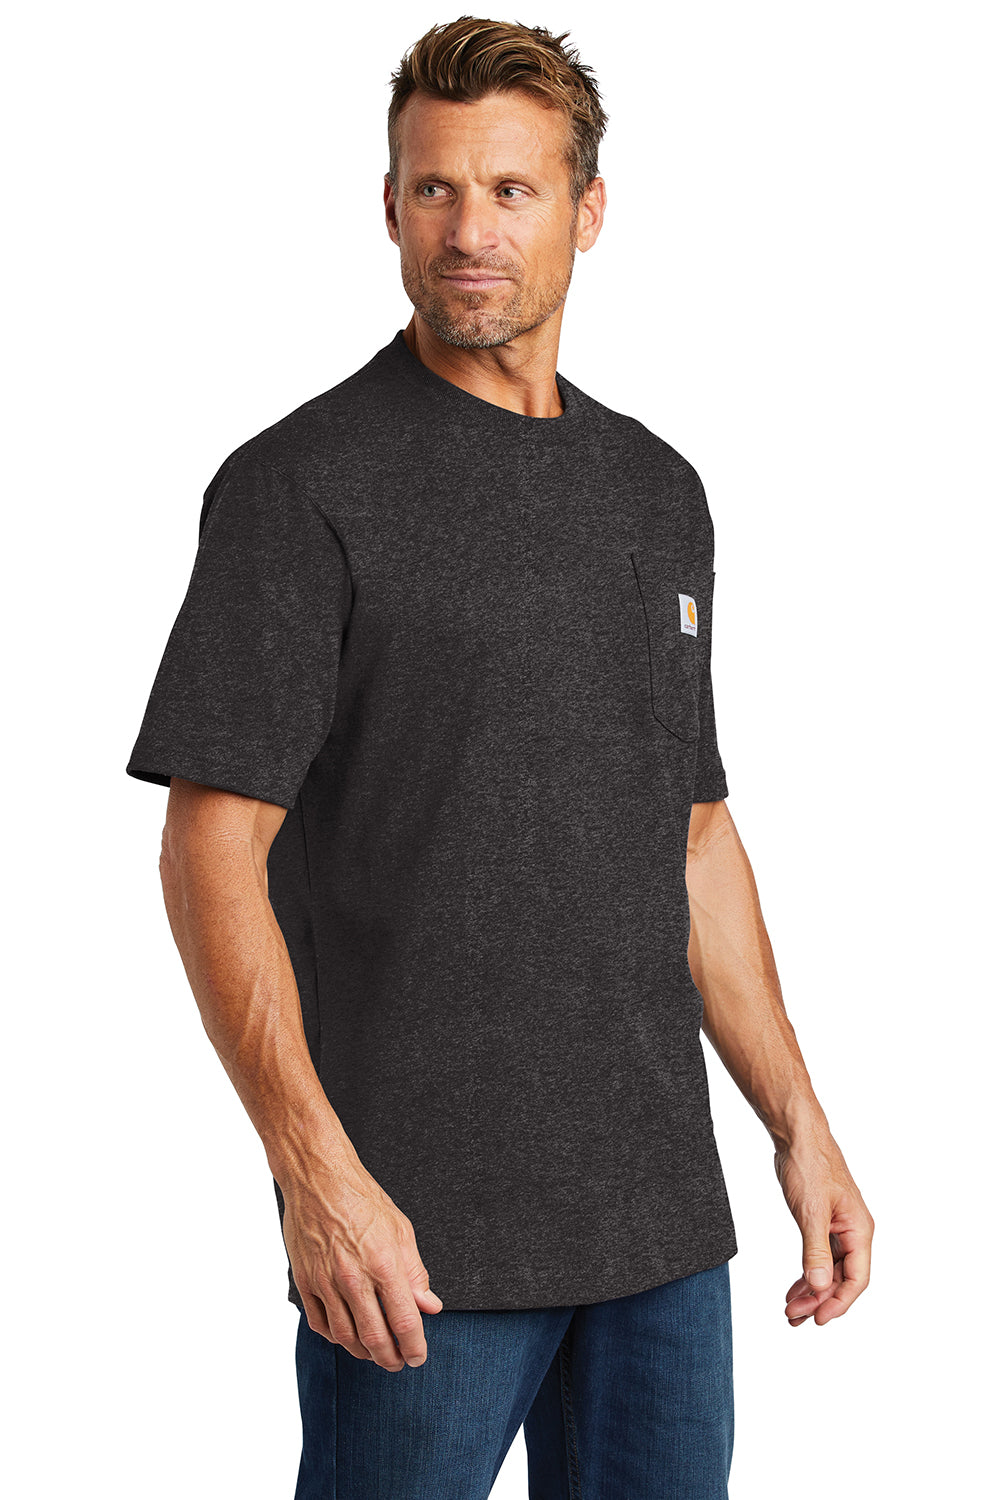 Carhartt CTK87/CTTK87 Mens Workwear Short Sleeve Crewneck T-Shirt w/ Pocket Heather Carbon Grey Model 3Q